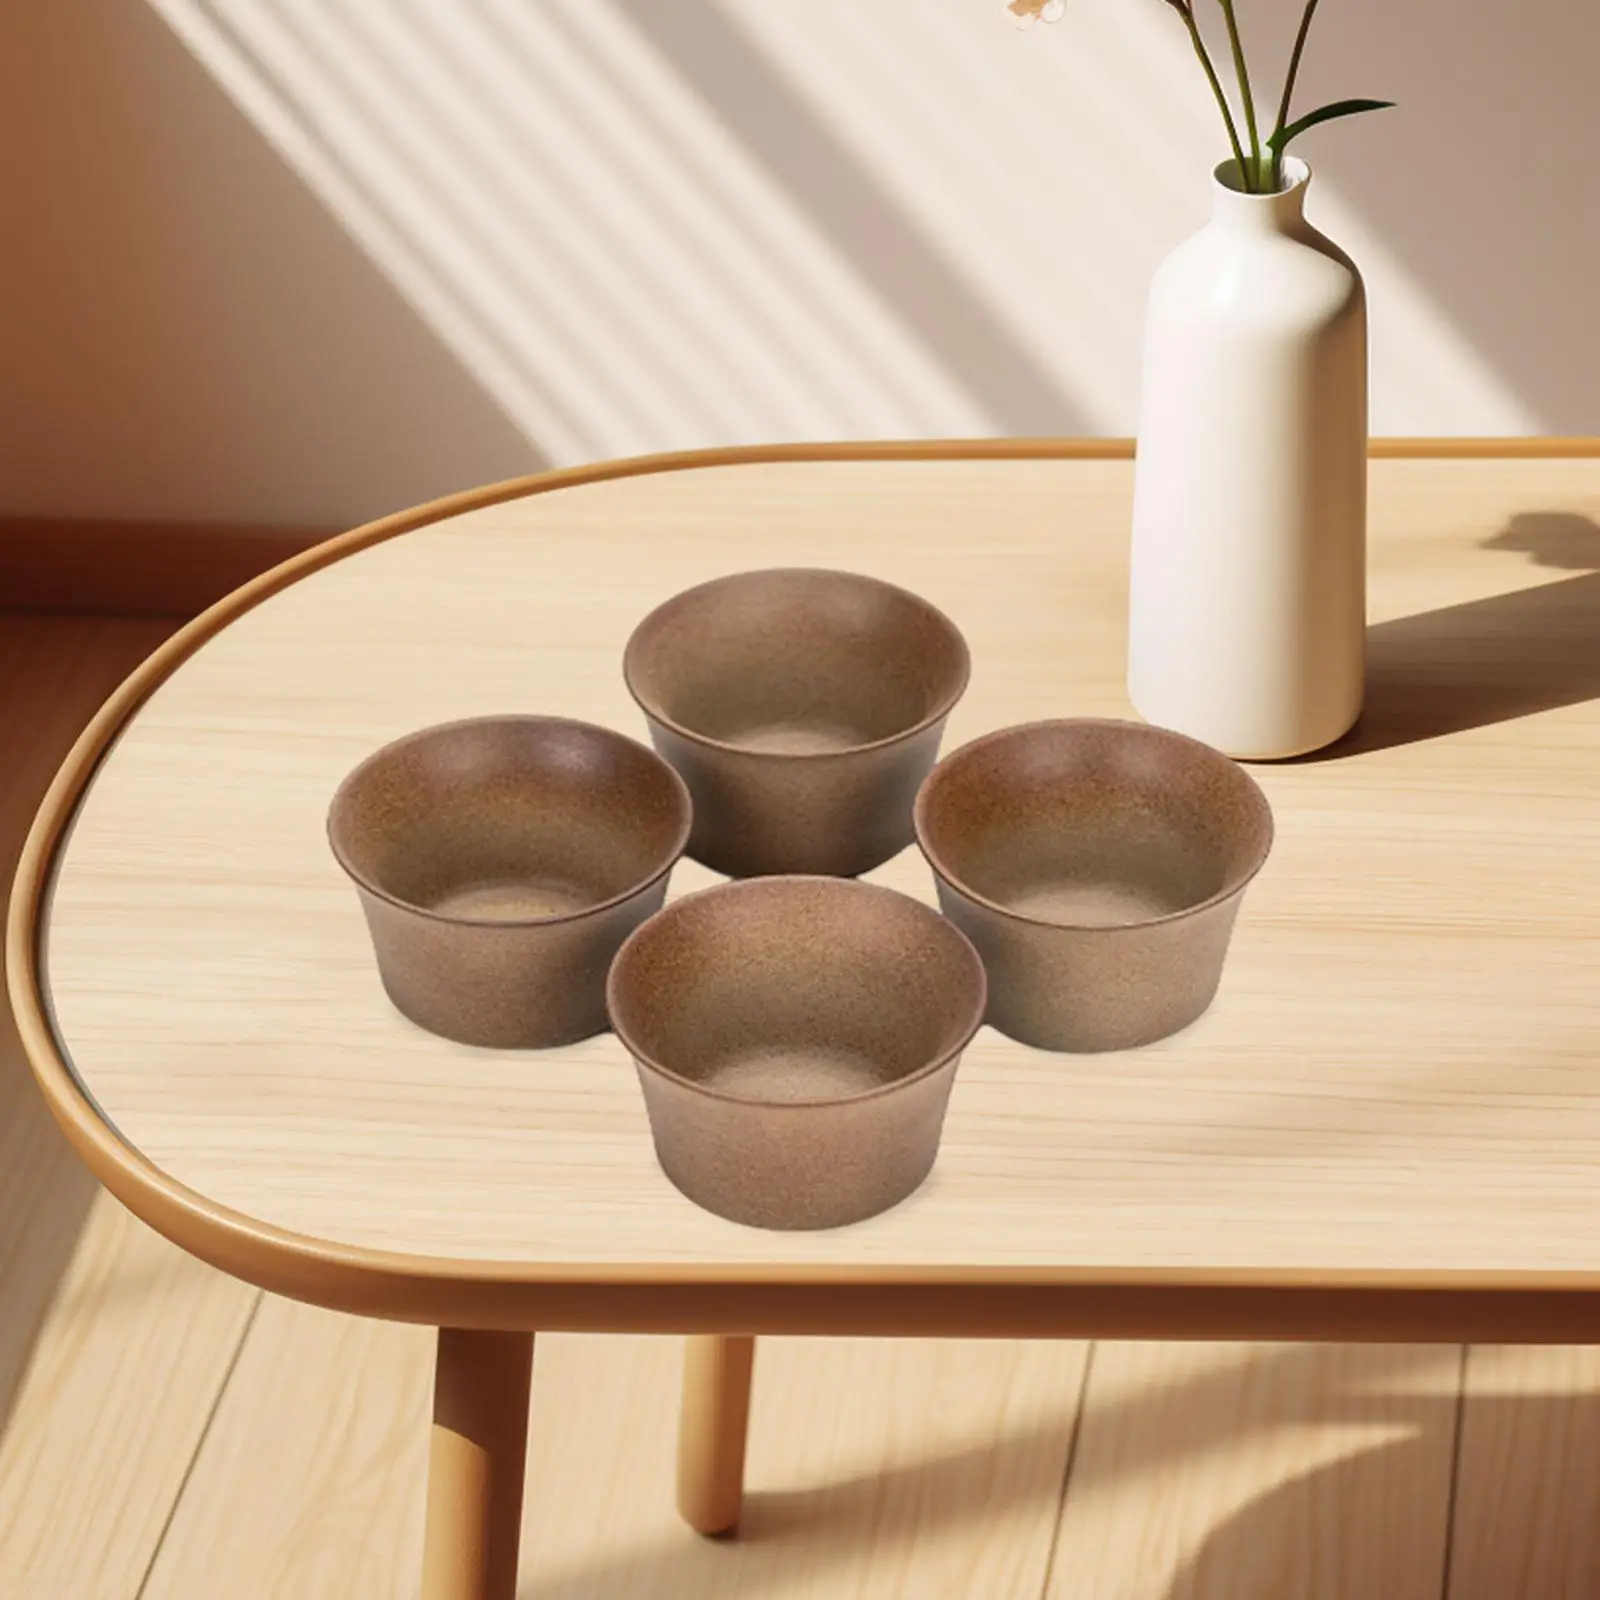 4x Japanese Ceramic Cup Set Traditional Kung Fu Tea Cup Handleless Tea Mug for Matcha Tea Cafe Travel Tea Ceremony Party Latte